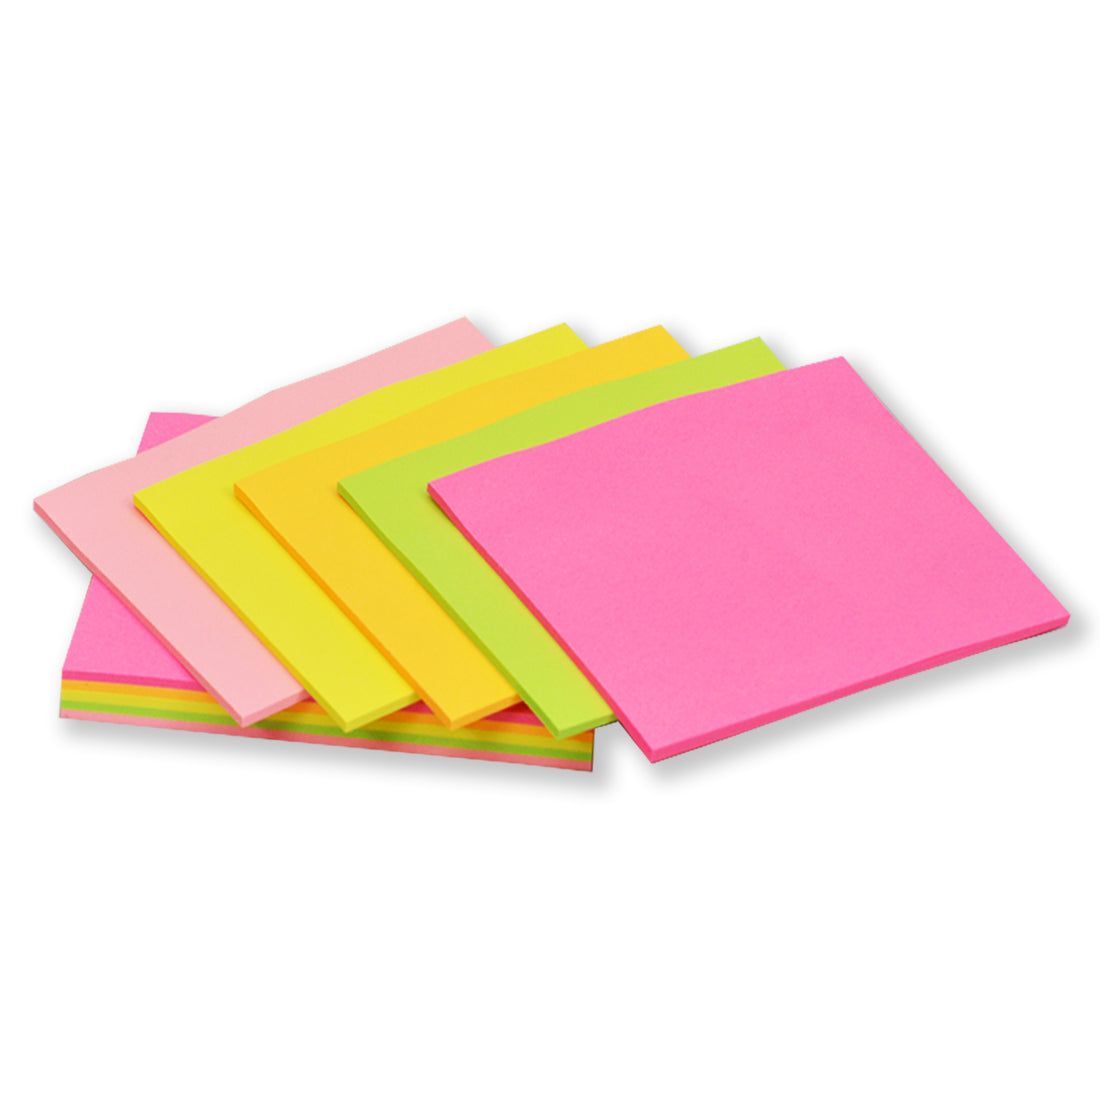 Sticky Notes Pad, Pocket-Size (3 x 4 Notes, 200 Sheets)